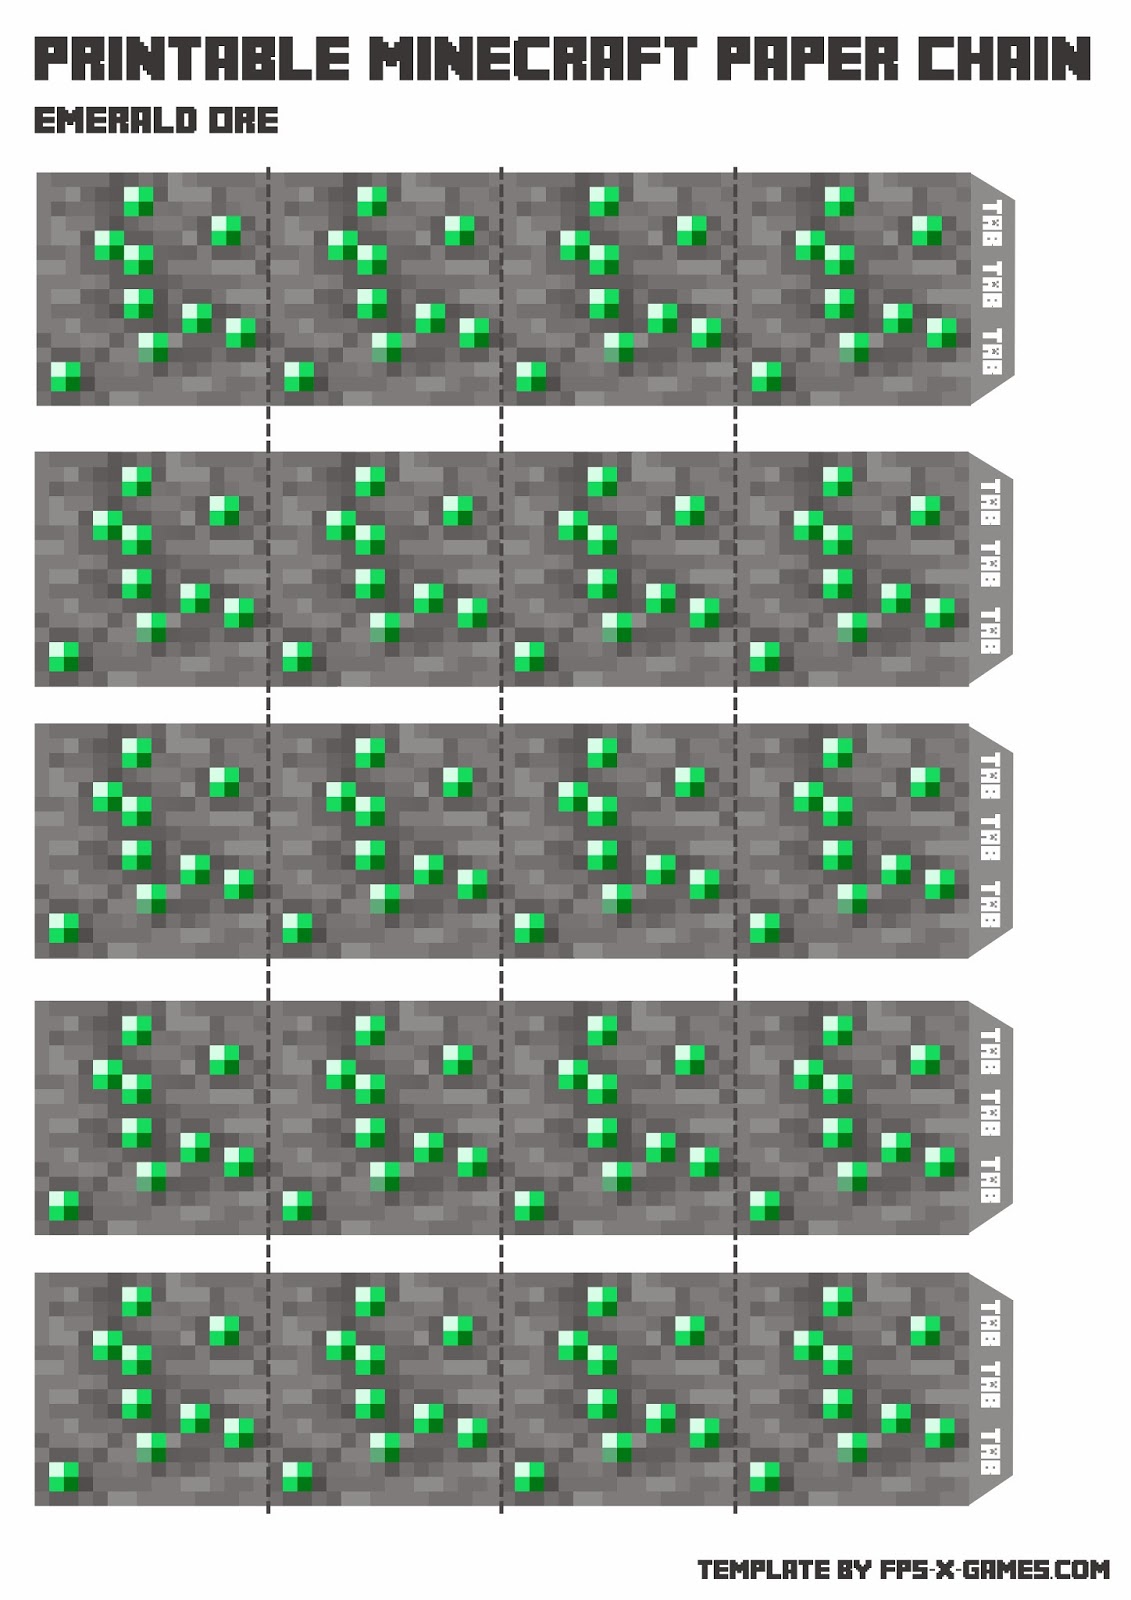 Minecraft Papercraft Chain - Emerald Ore